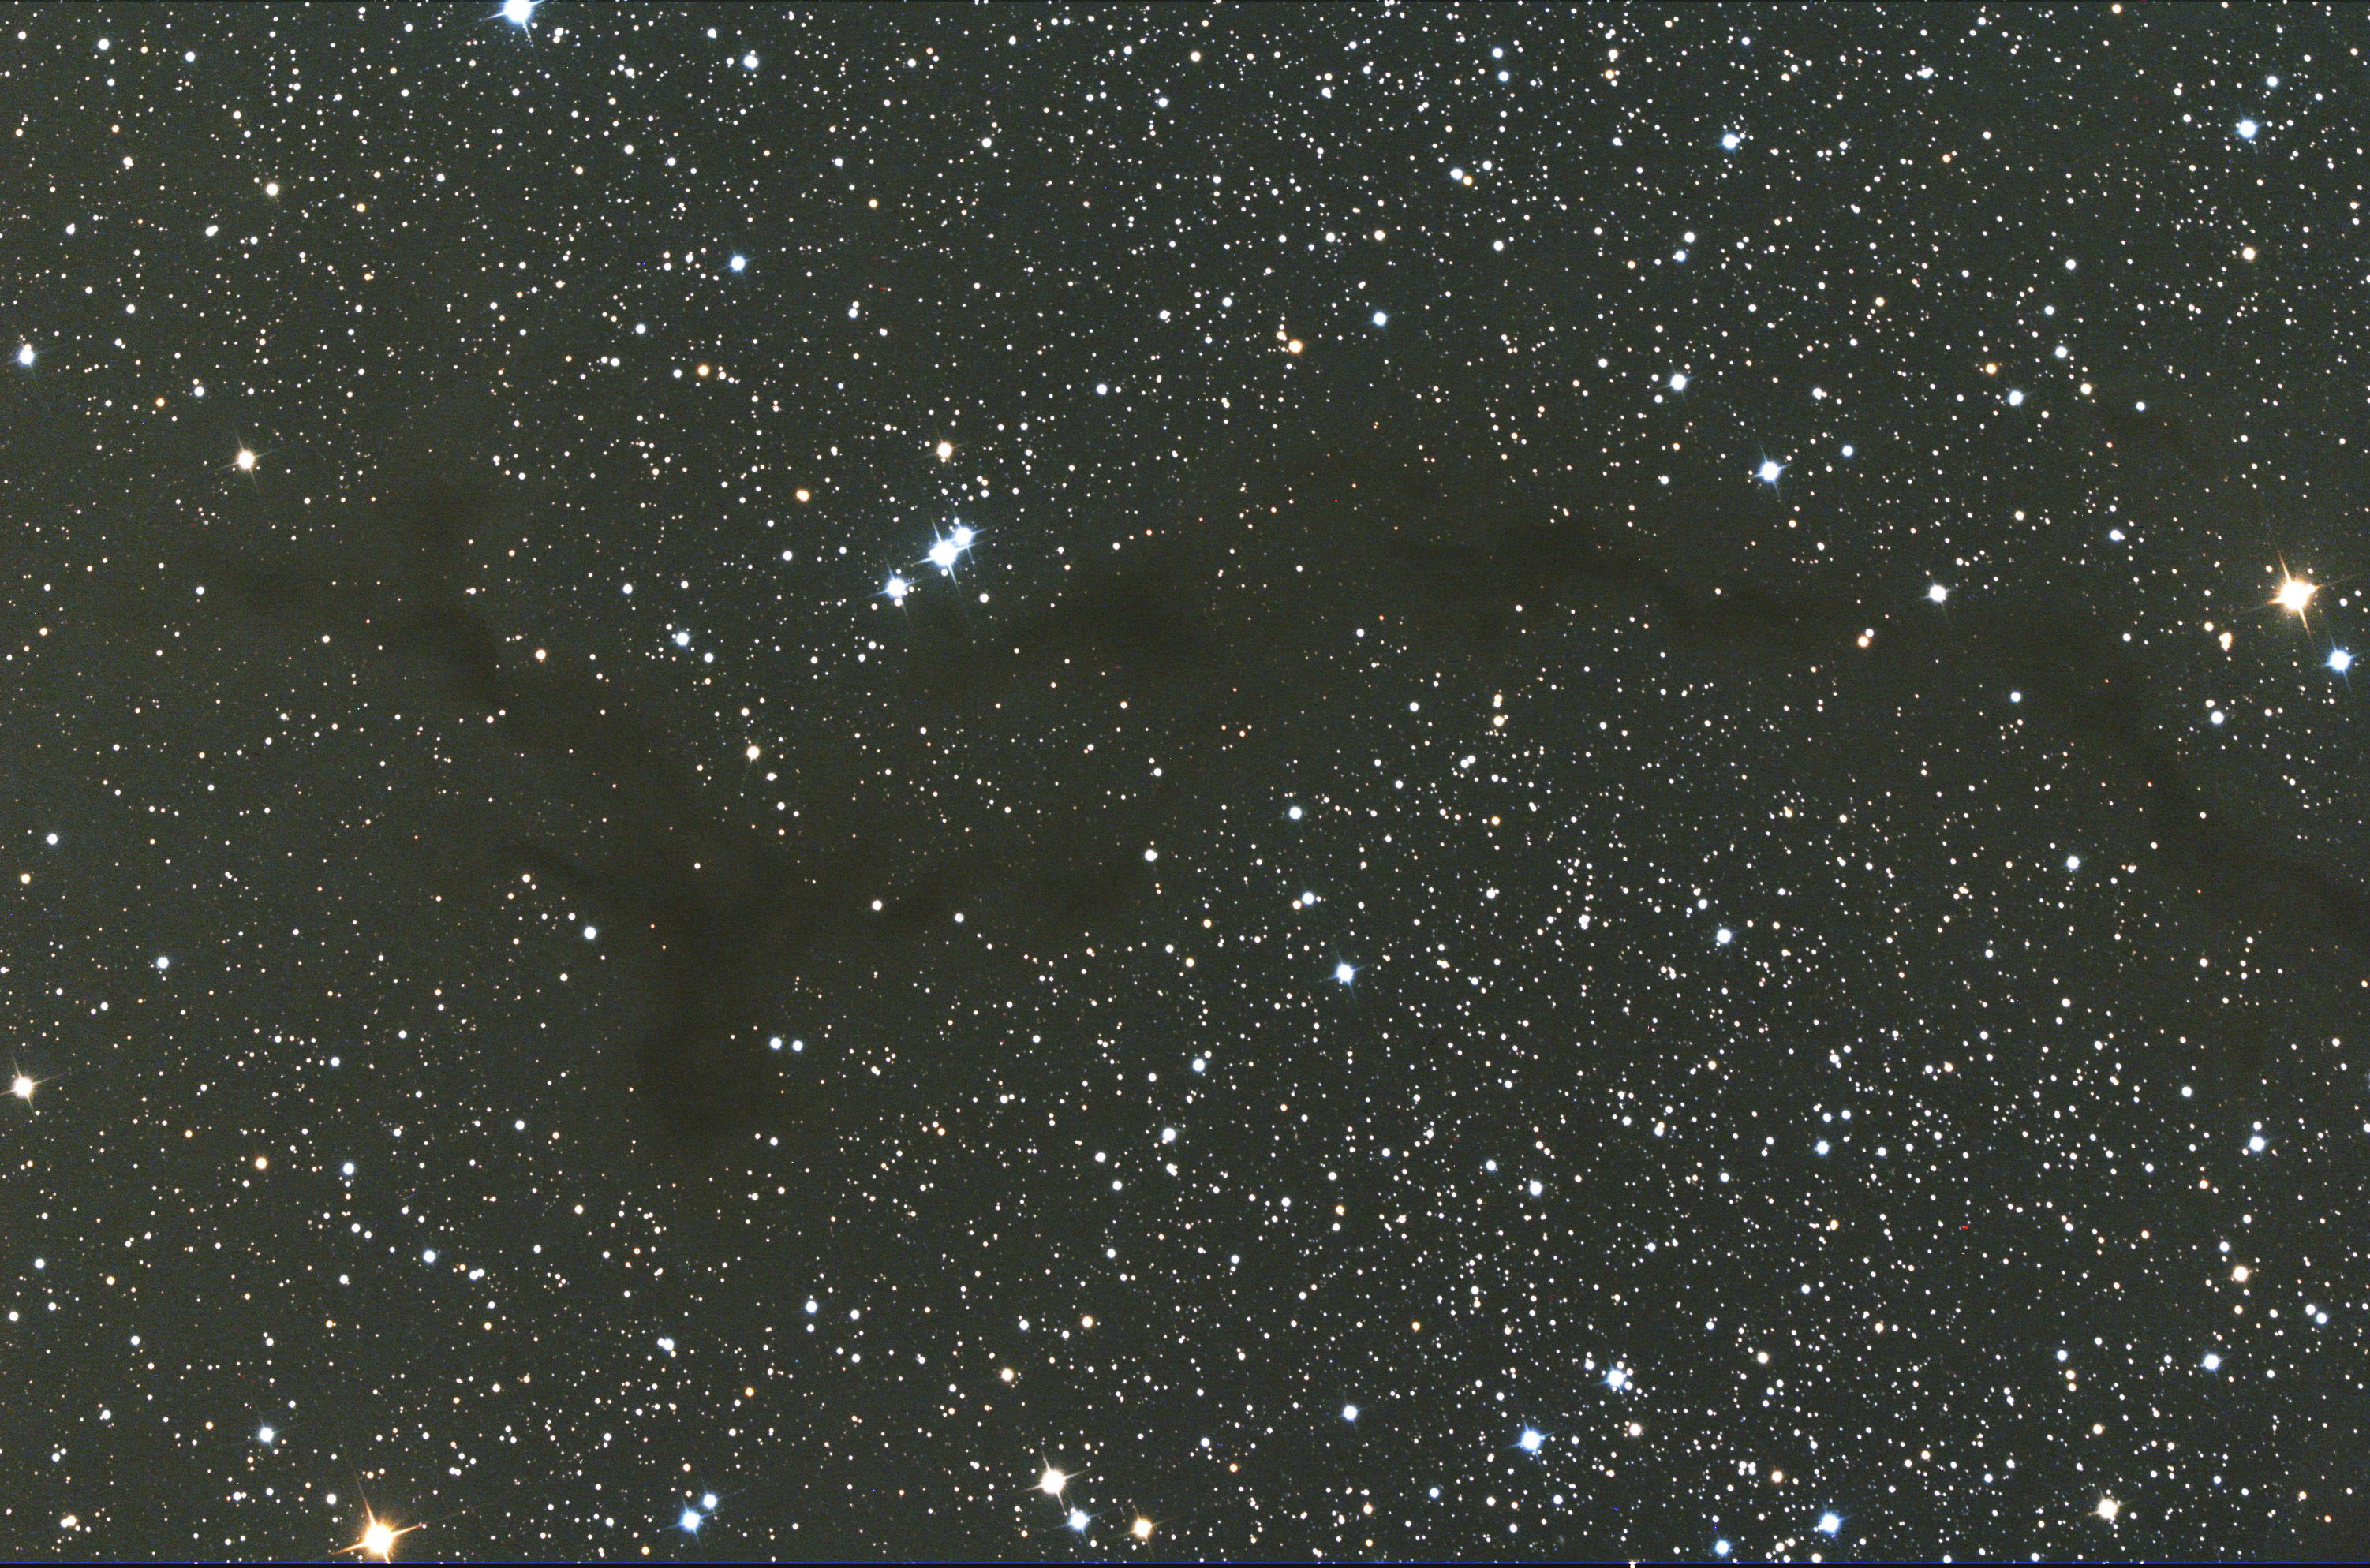 Barnard B148, B149, B150 in Cepheus